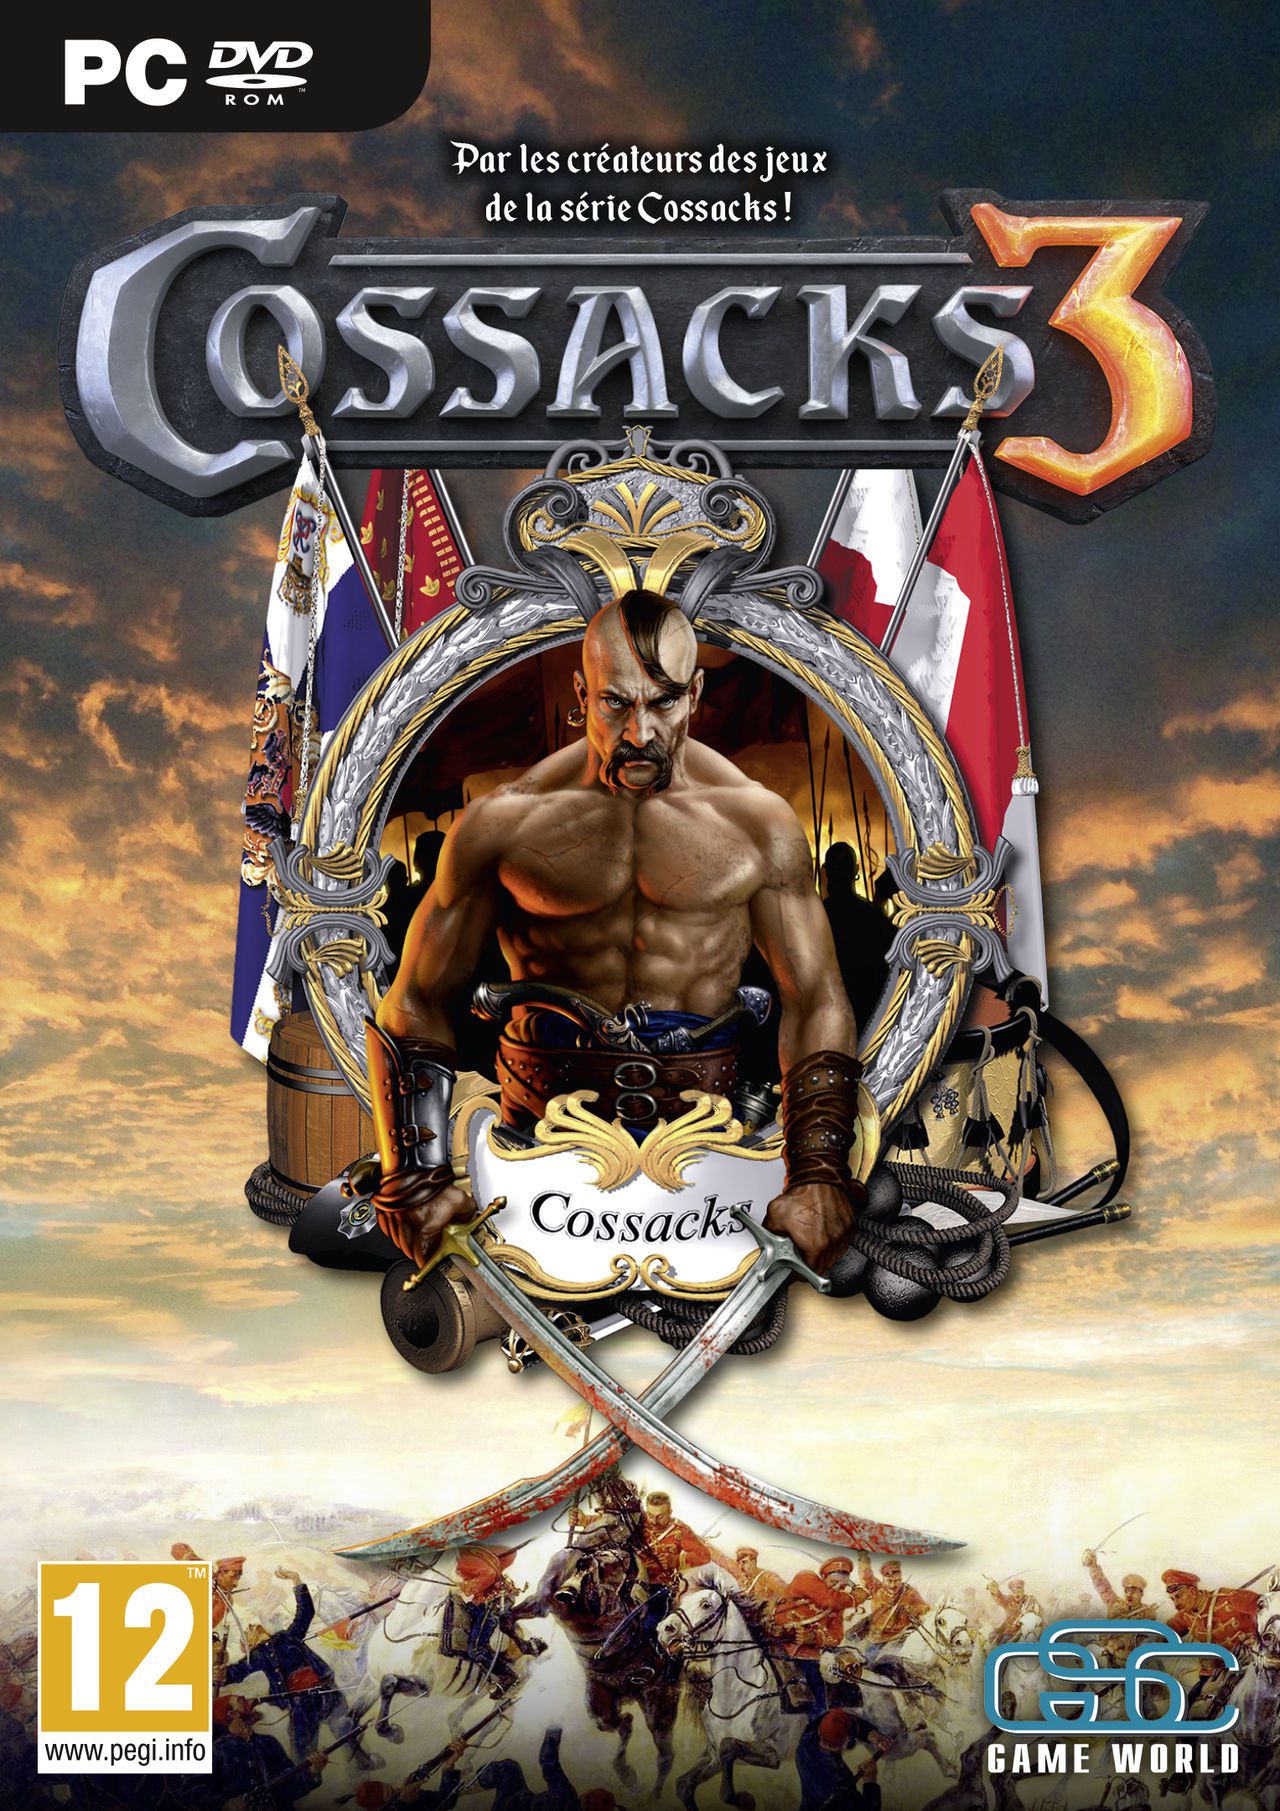 Cossacks 3 (2016)  - Jeu vidéo streaming VF gratuit complet